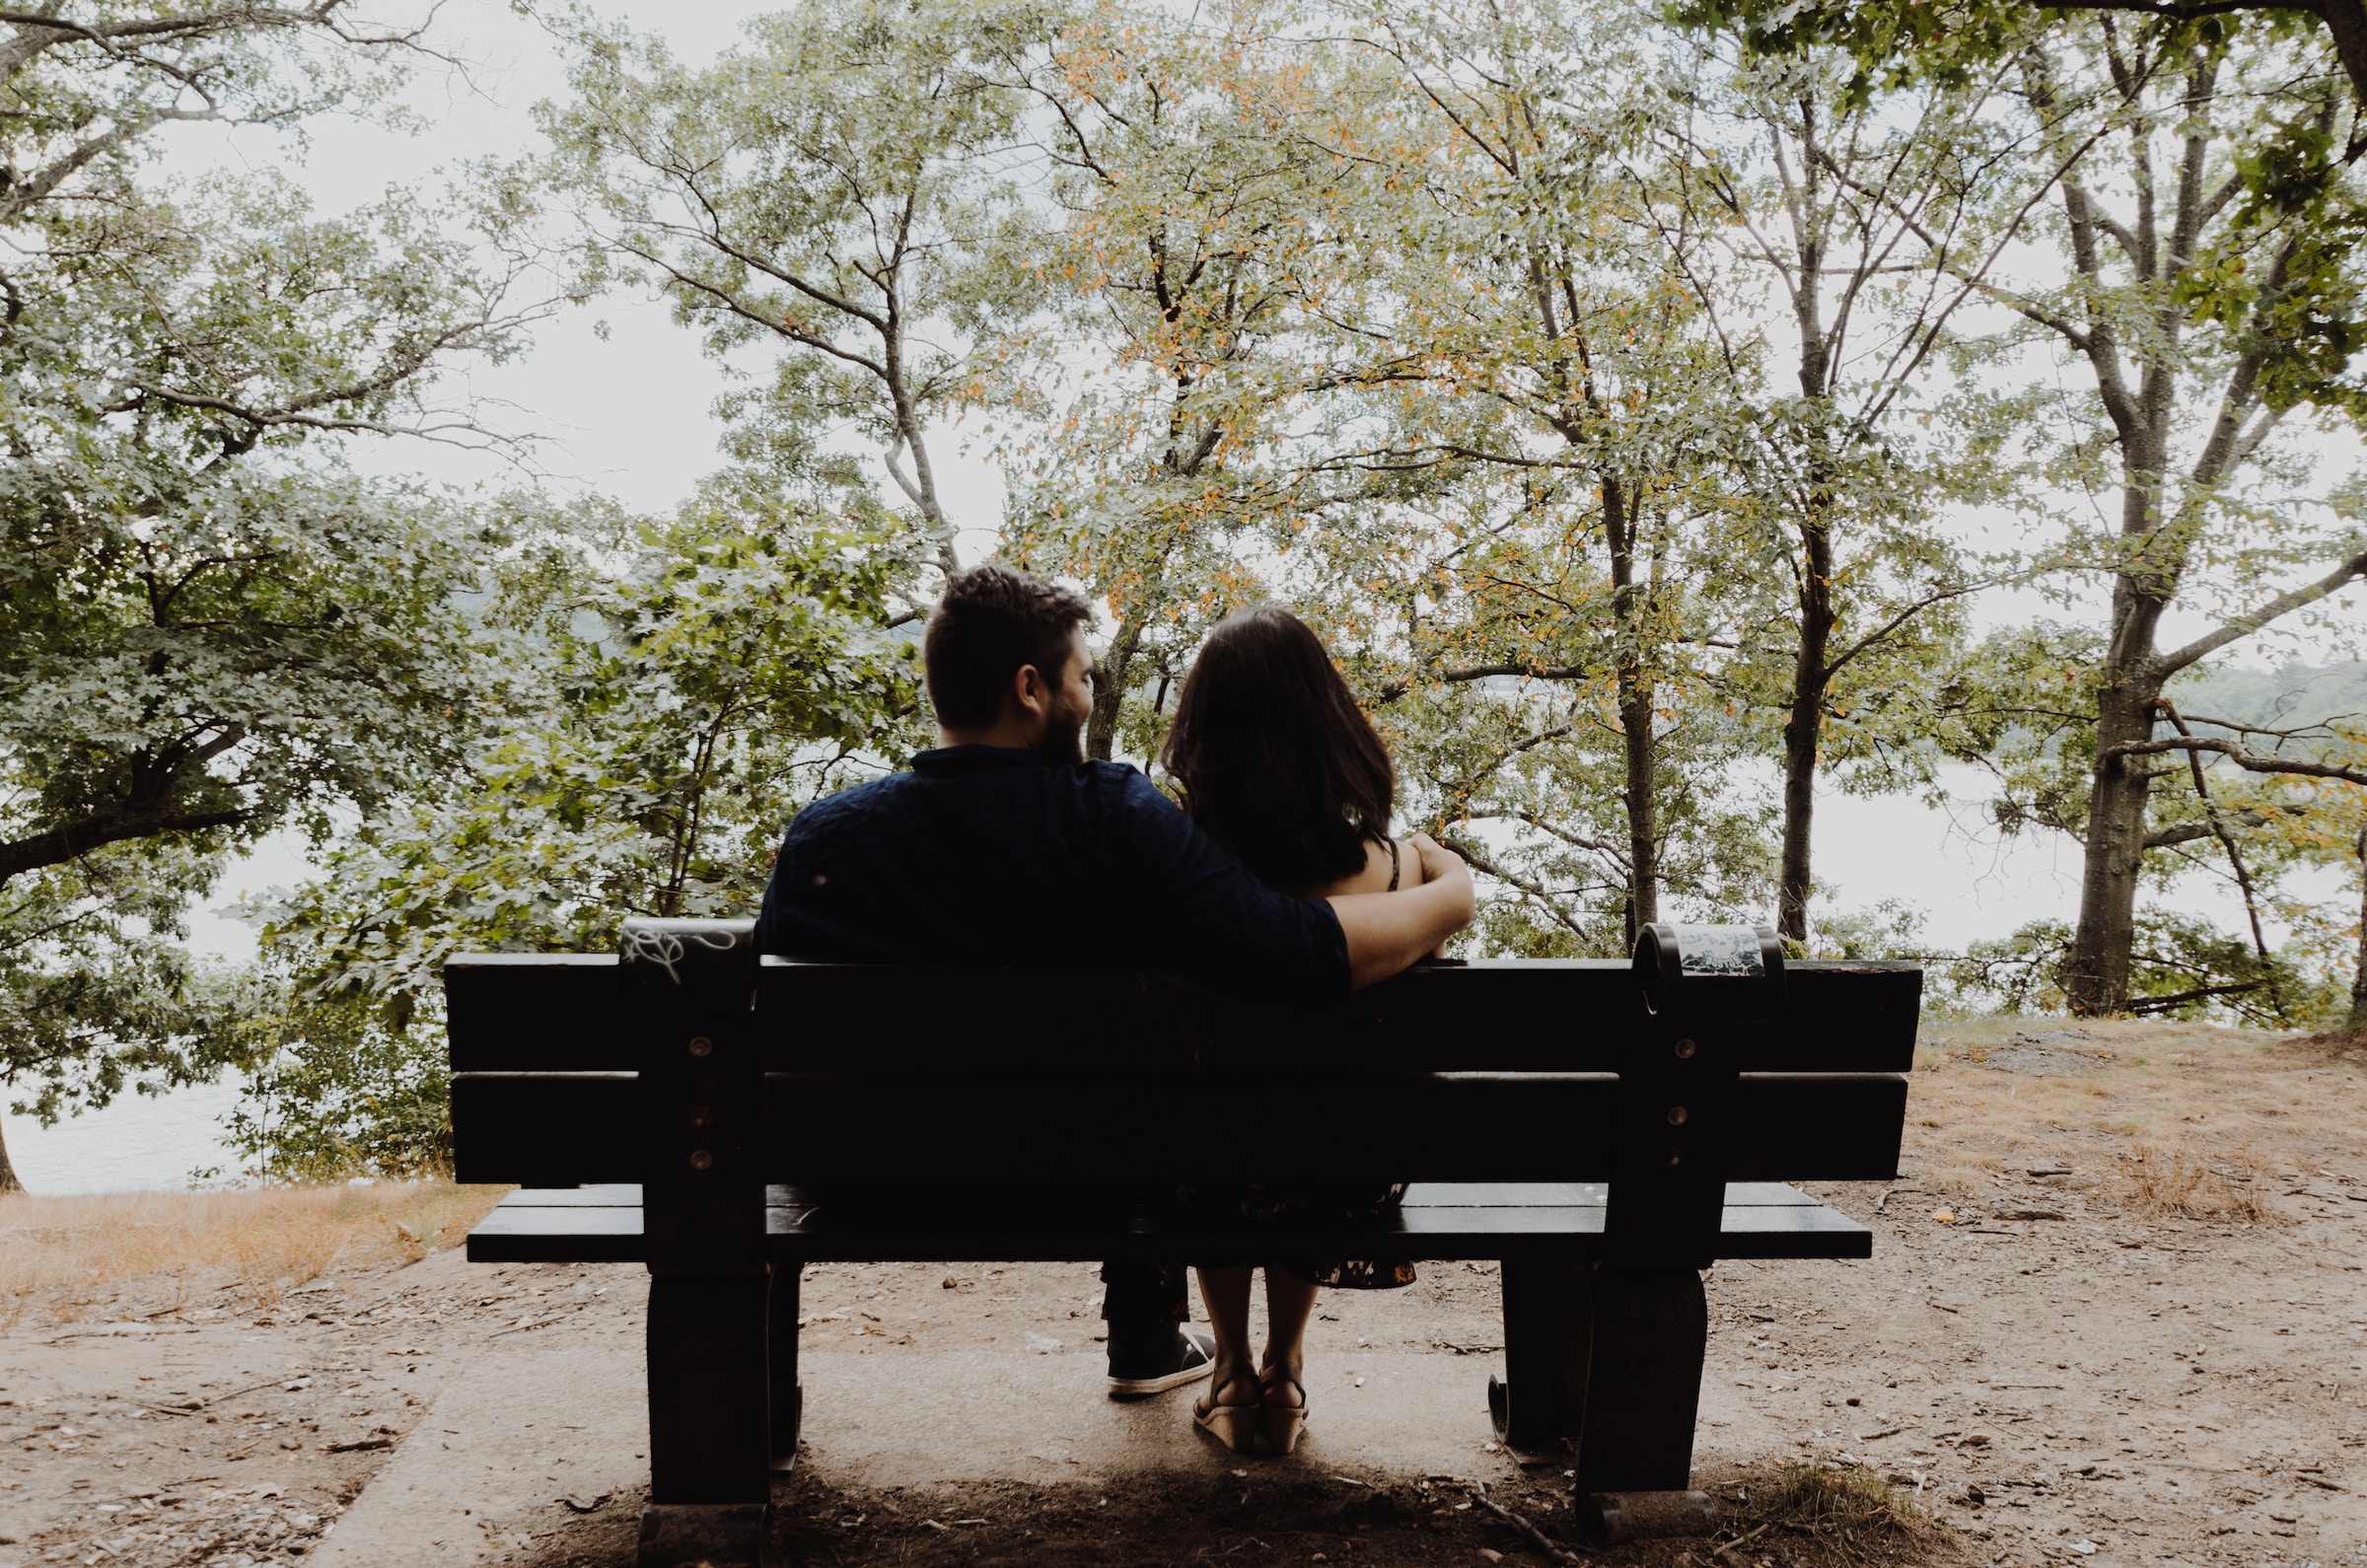 Couple sitting on bench | Source: Unsplash